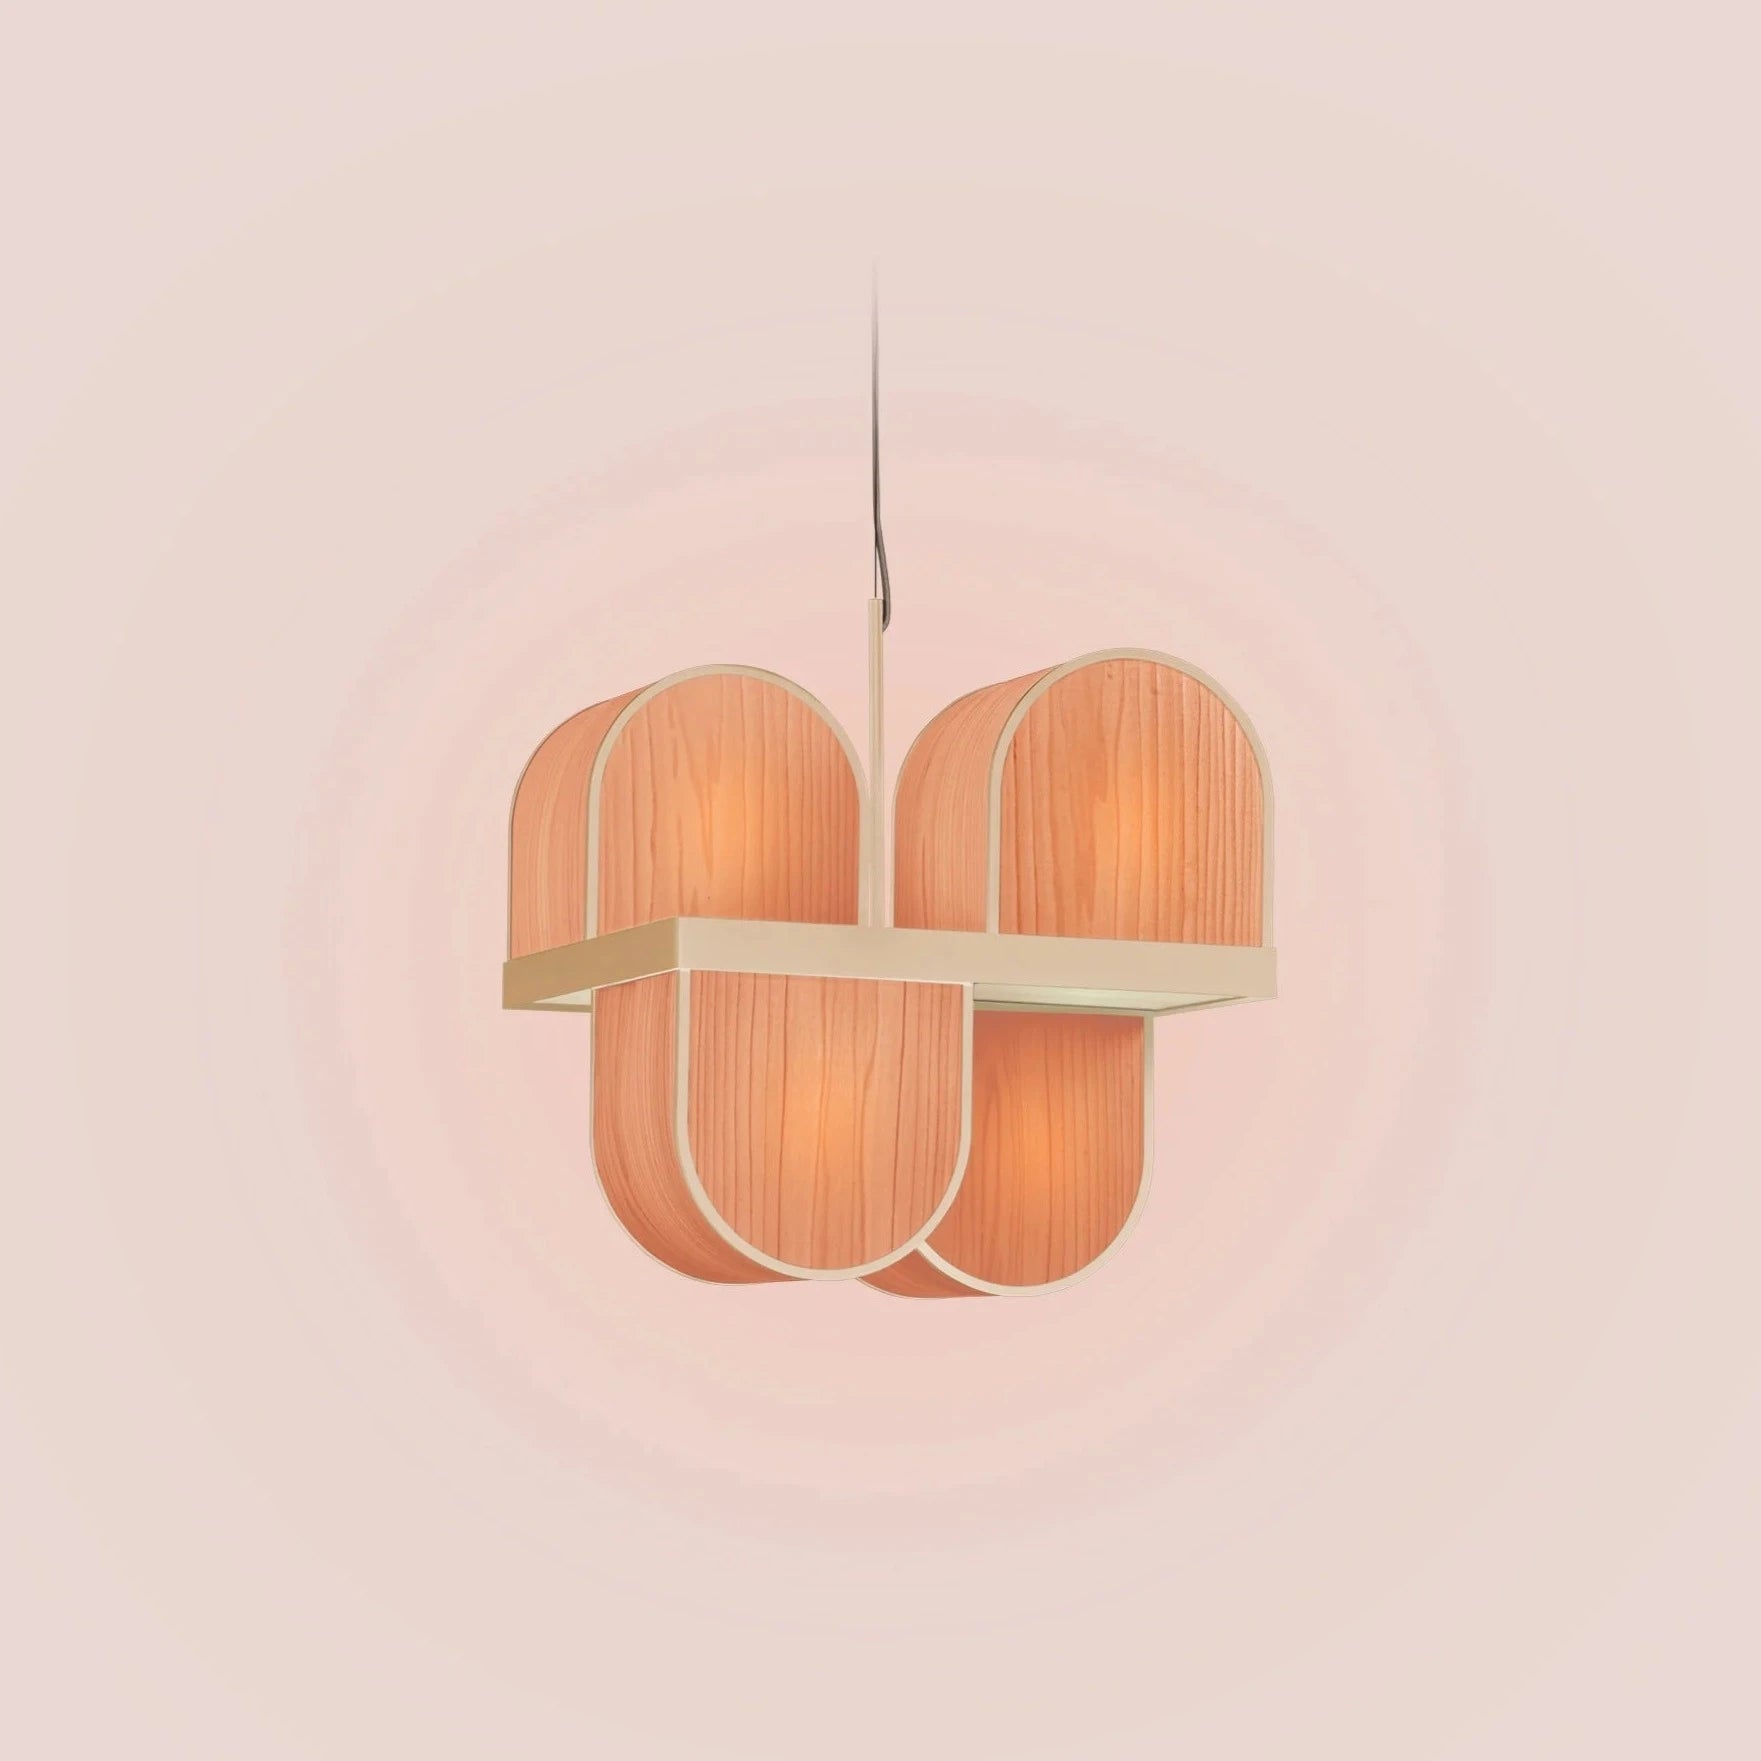 Wood Veneer Pink Suspended light. Bauhaus lighting. bauhaus design with midcentury Modern natural veneer